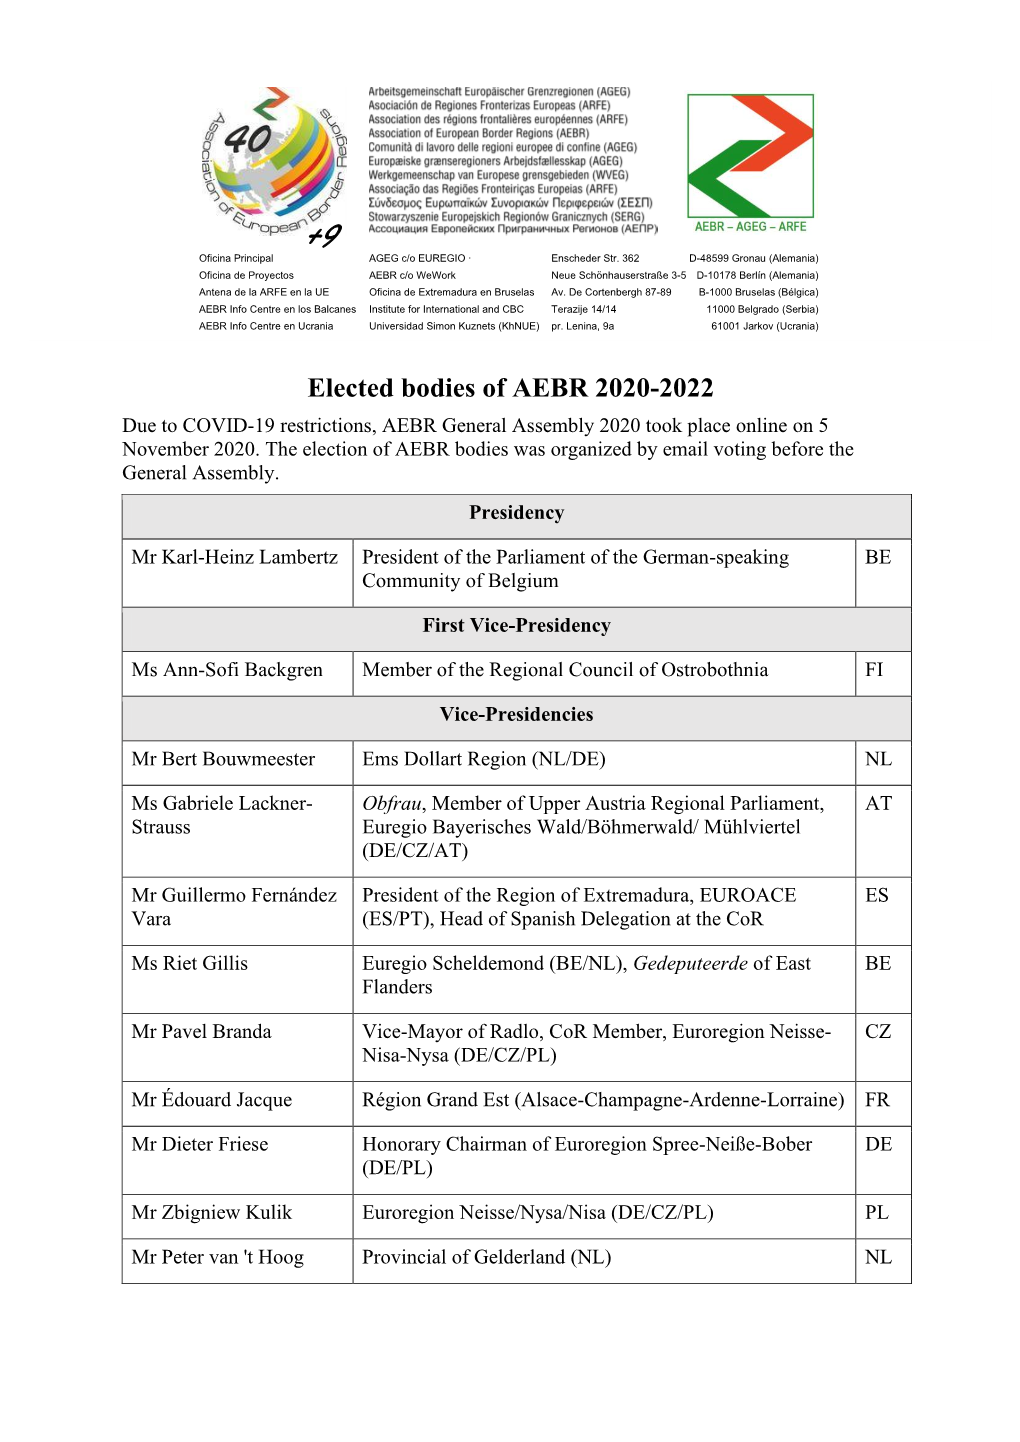 Elected AEBR Executive Committee Members 2021-2022